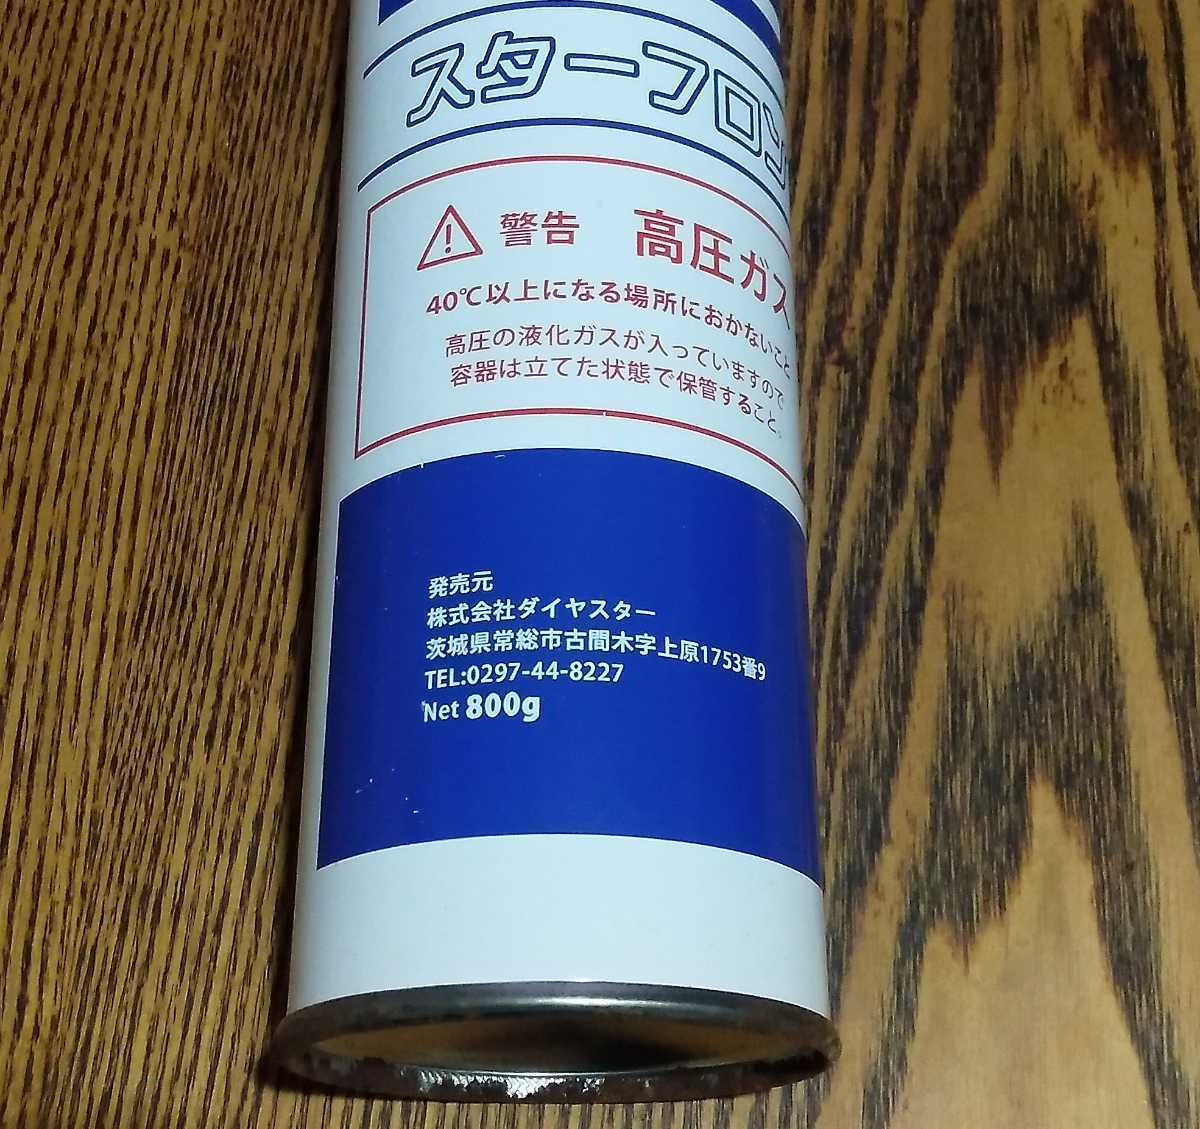 HCFC-22 R-22冷媒 サービス缶 Net 800g 新品 未使用